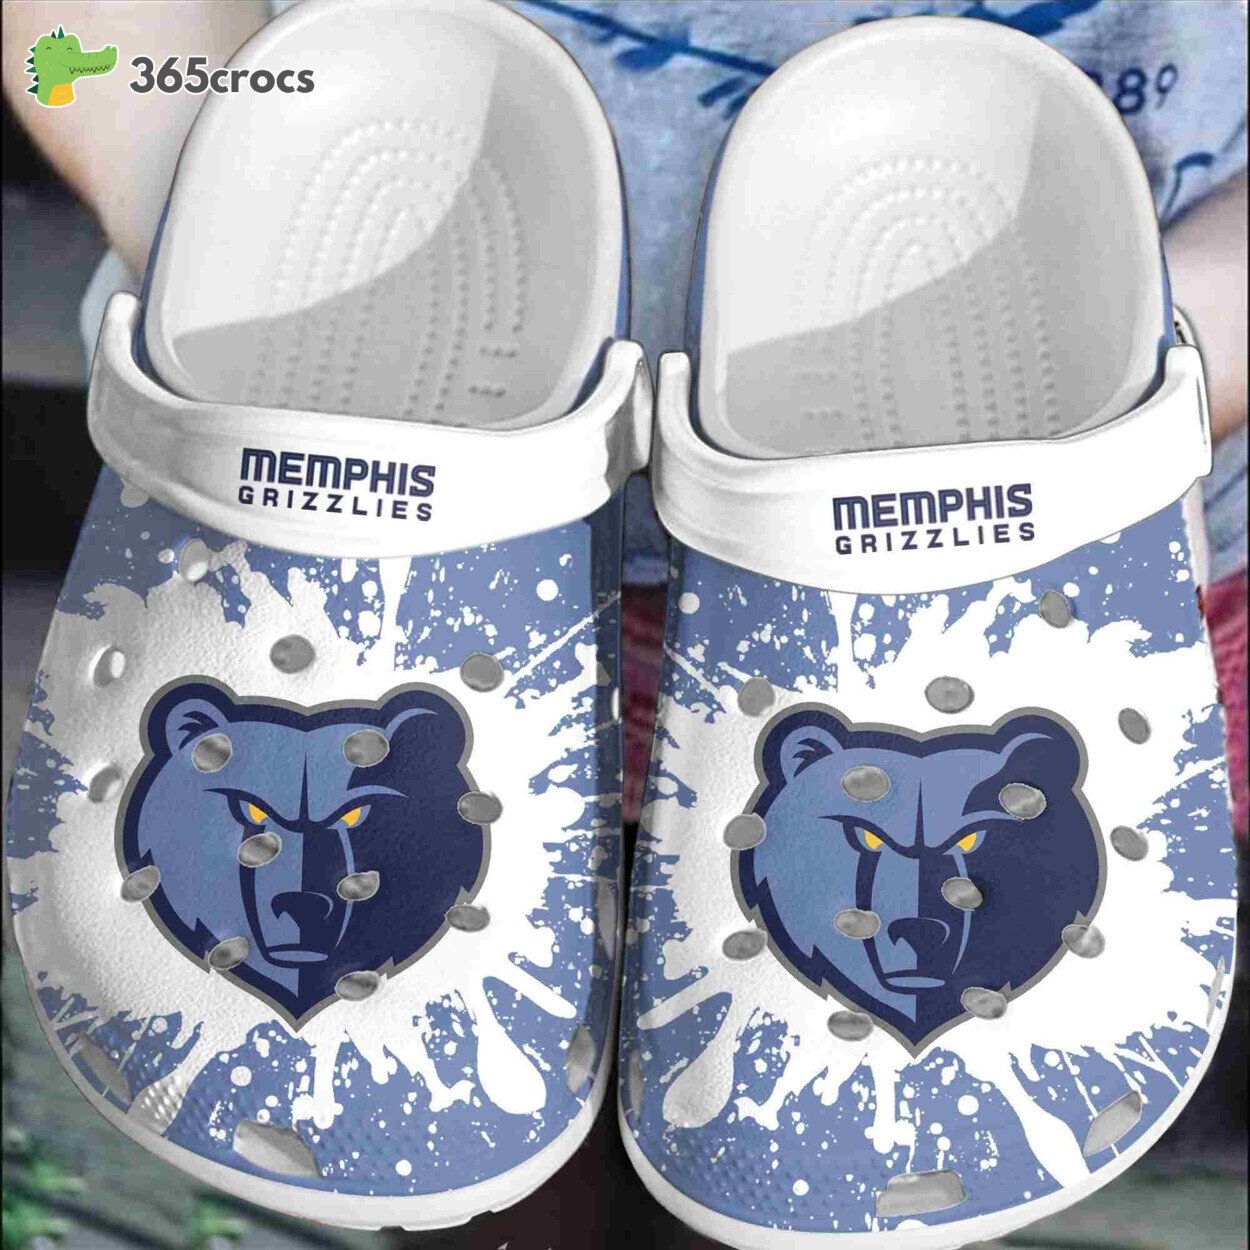 Memphis Grizzlies Basketball Club Clogs Shoes Crocss Comfortable